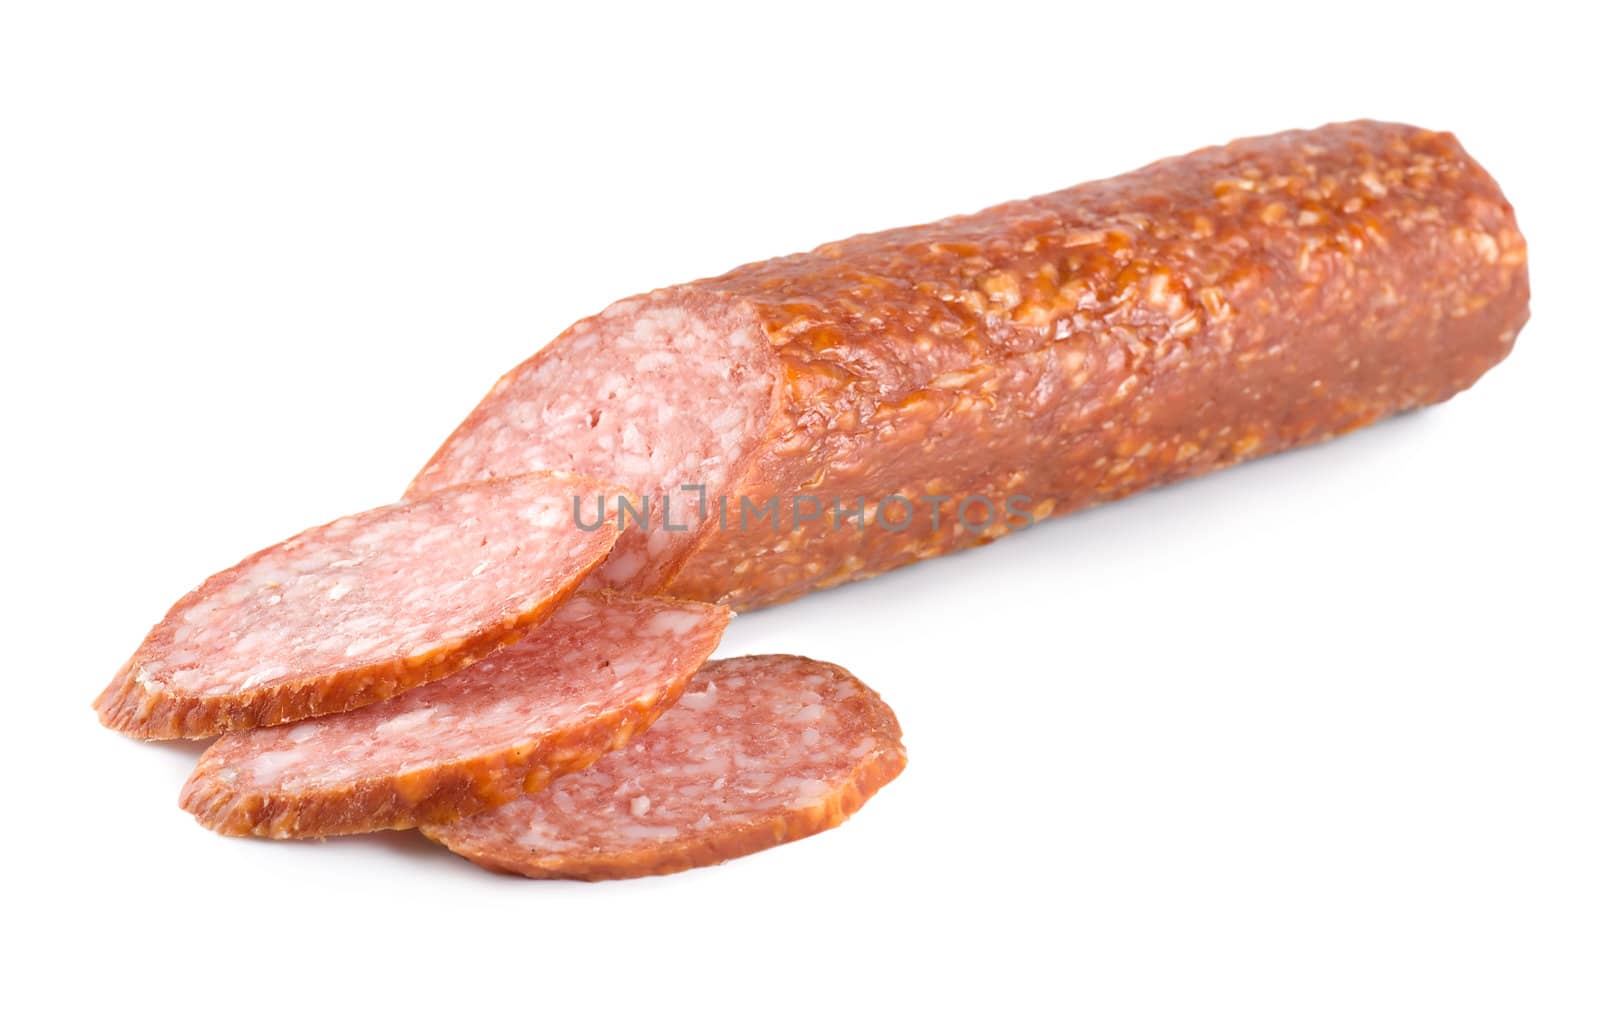 Juicy smoked sausage by Givaga